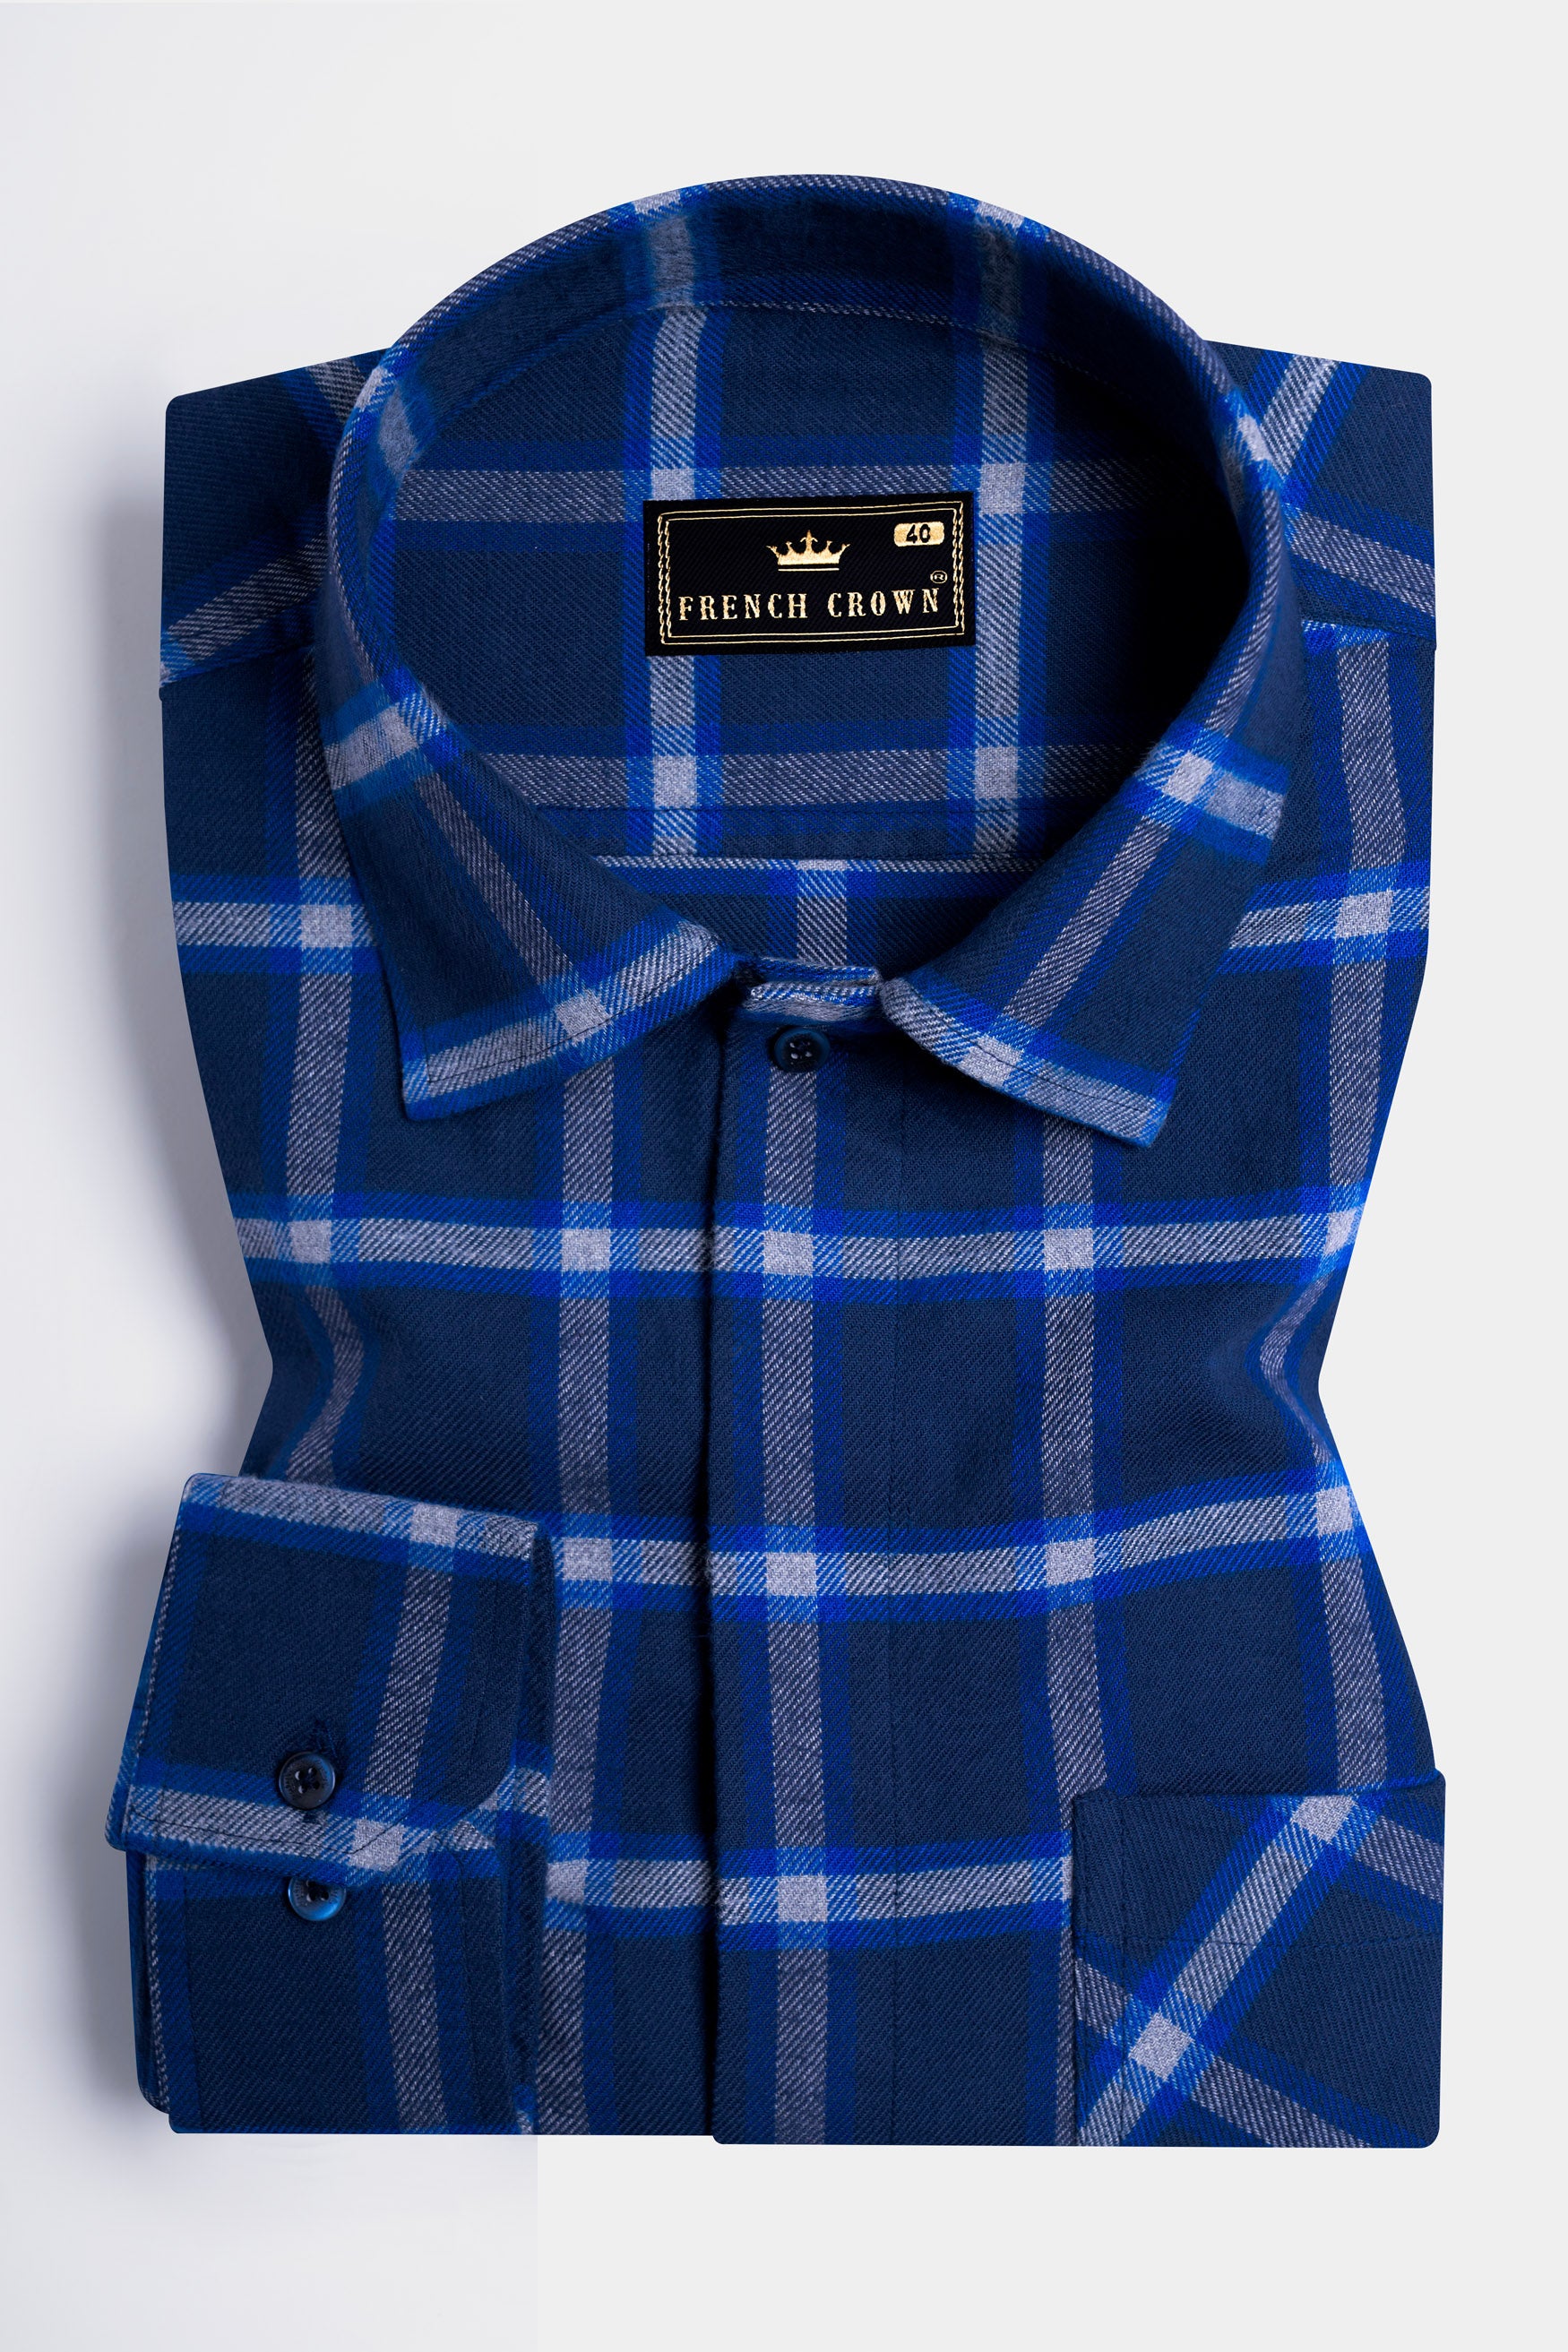 Downriver Blue and White Twill Checkered Premium Cotton Designer Overshirt